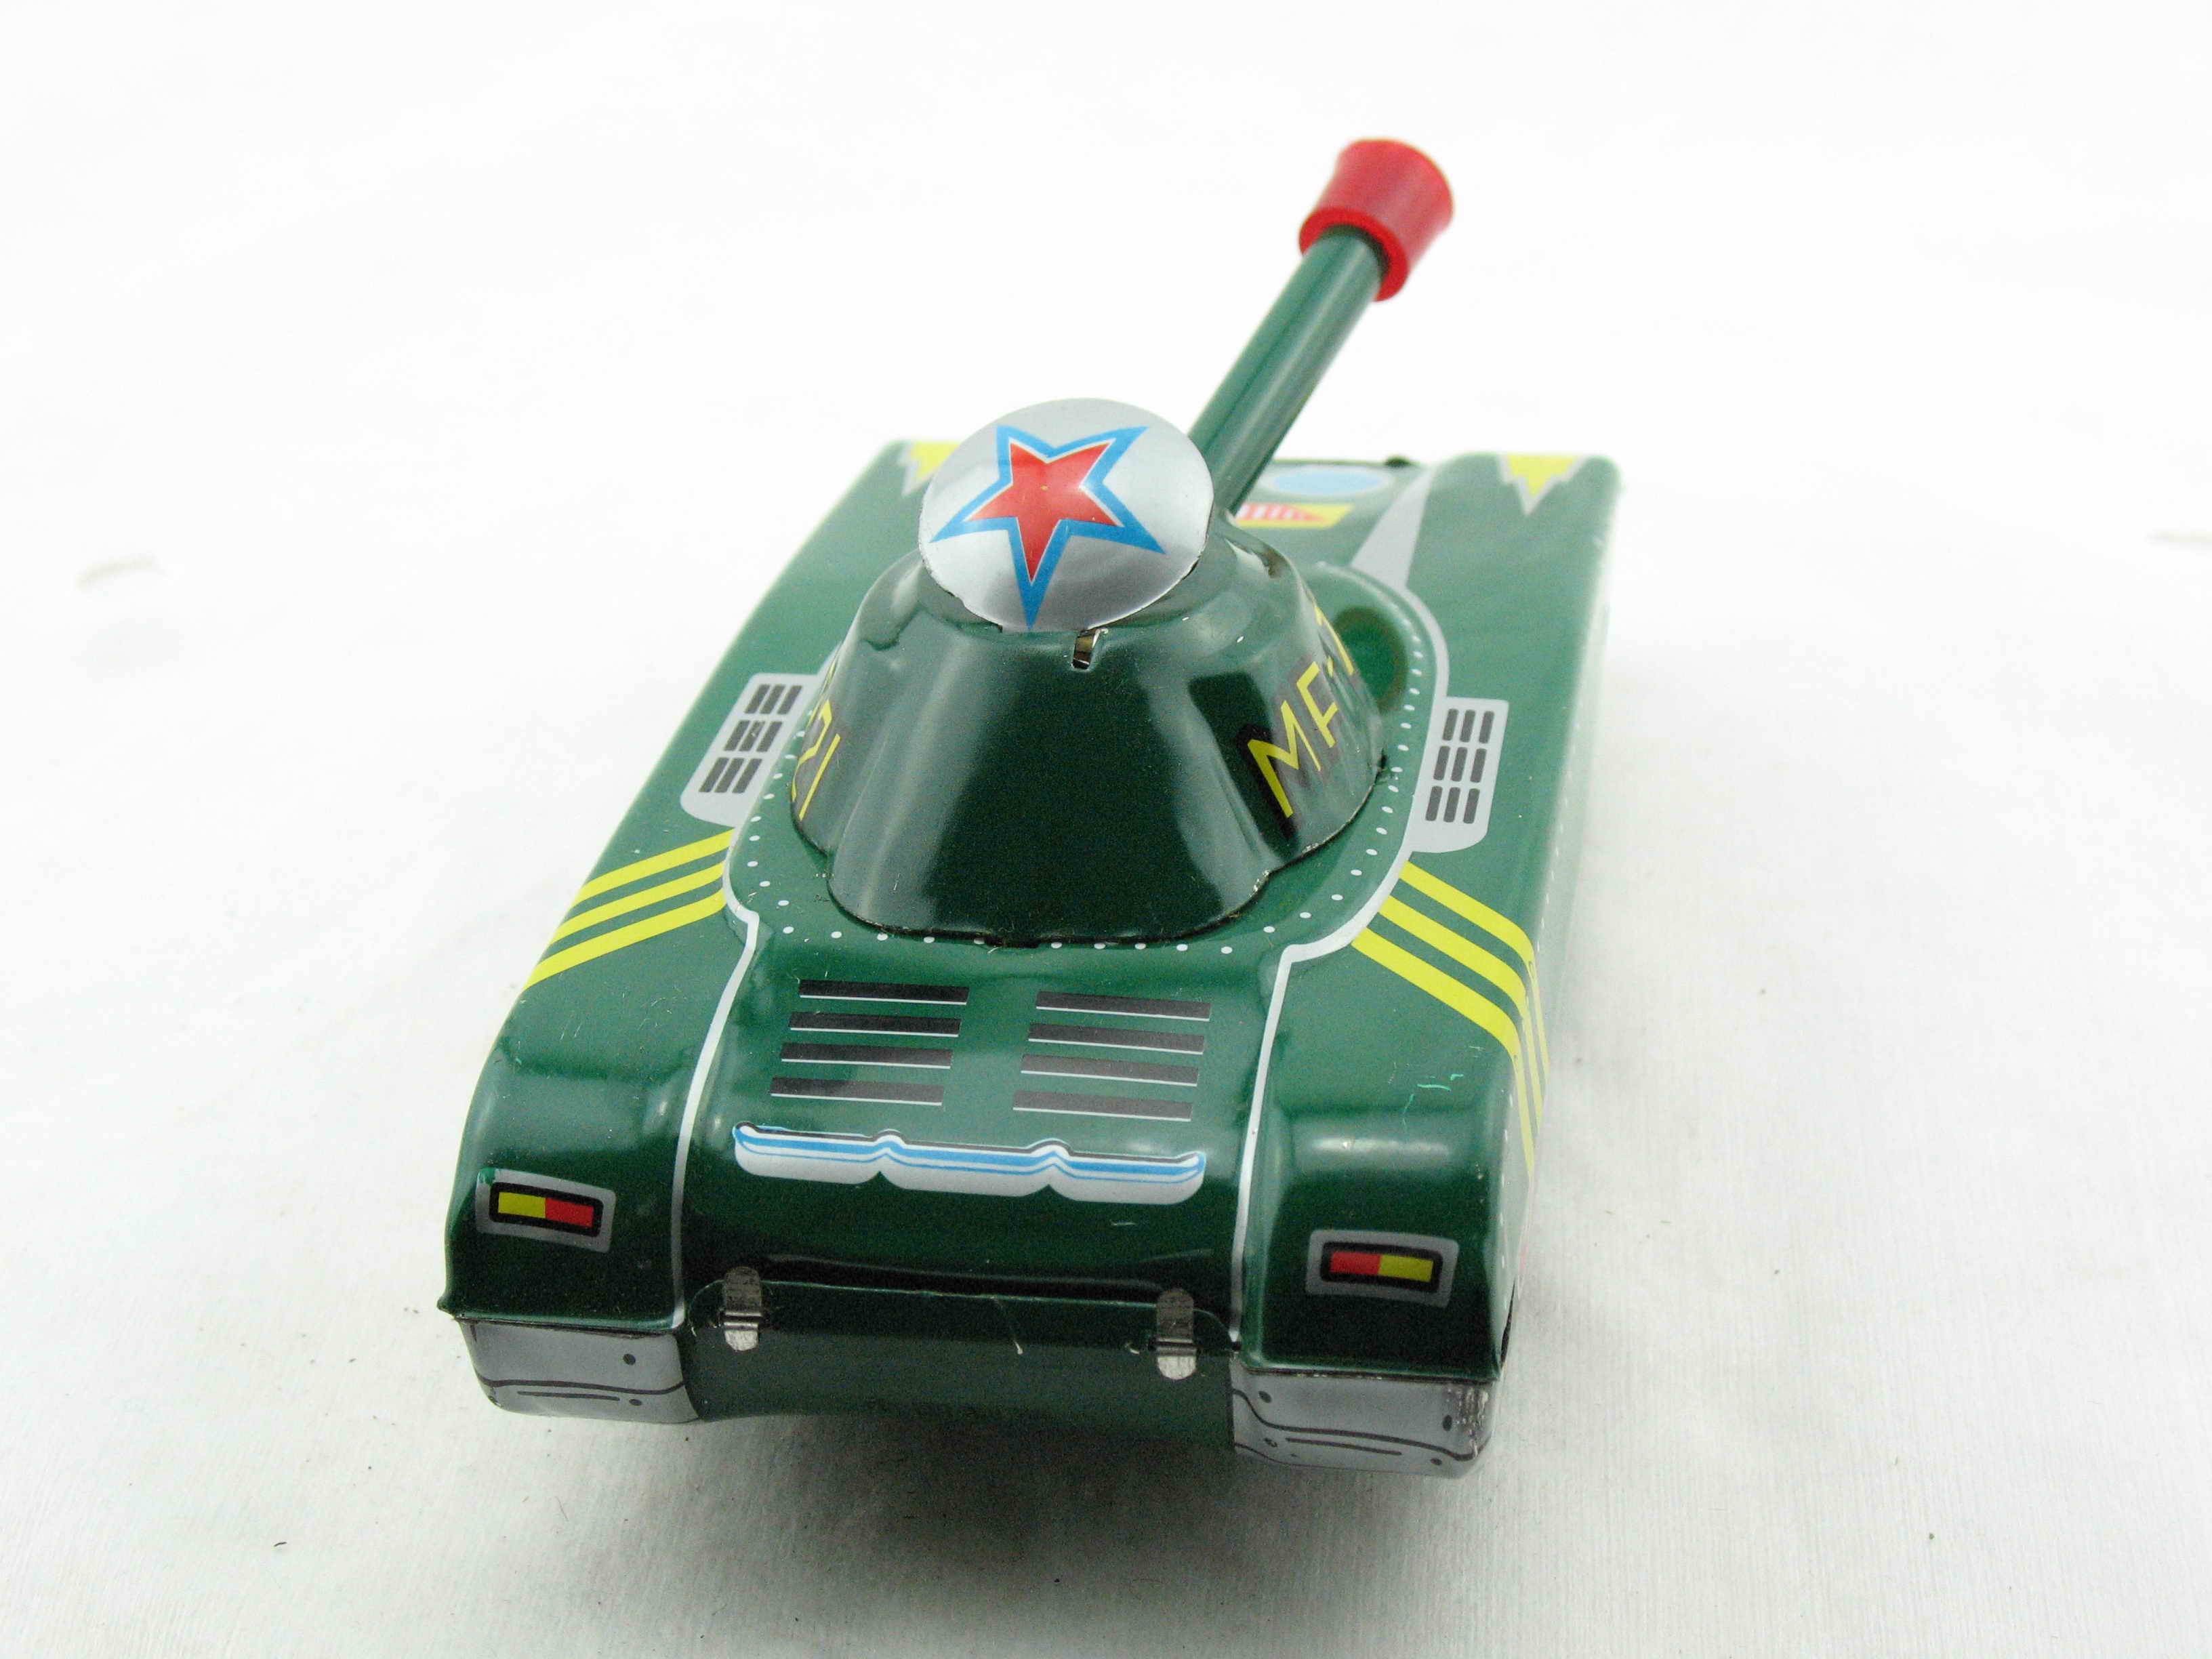 Blechspielzeug Panzer MF-721 mit Fahrer 4220721 